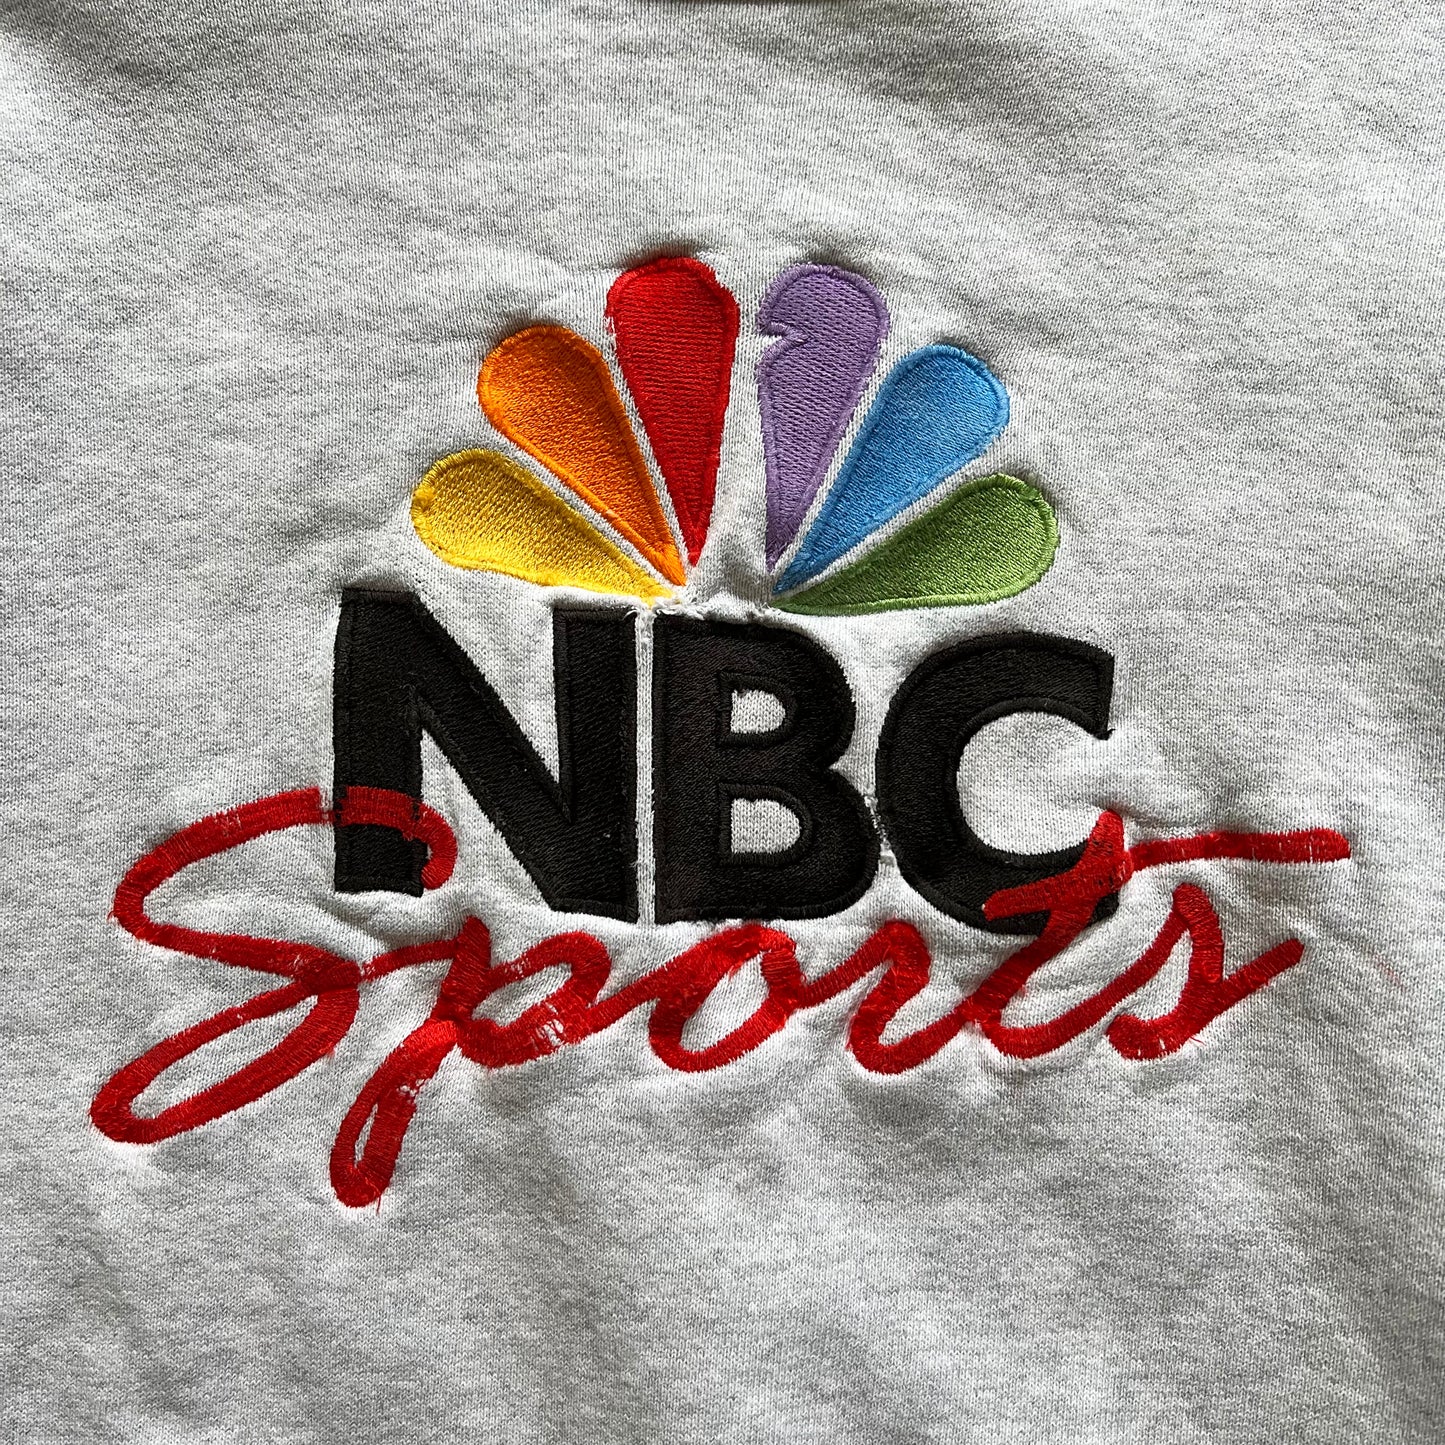 90's "NBC Sports" SWEATSHIRT